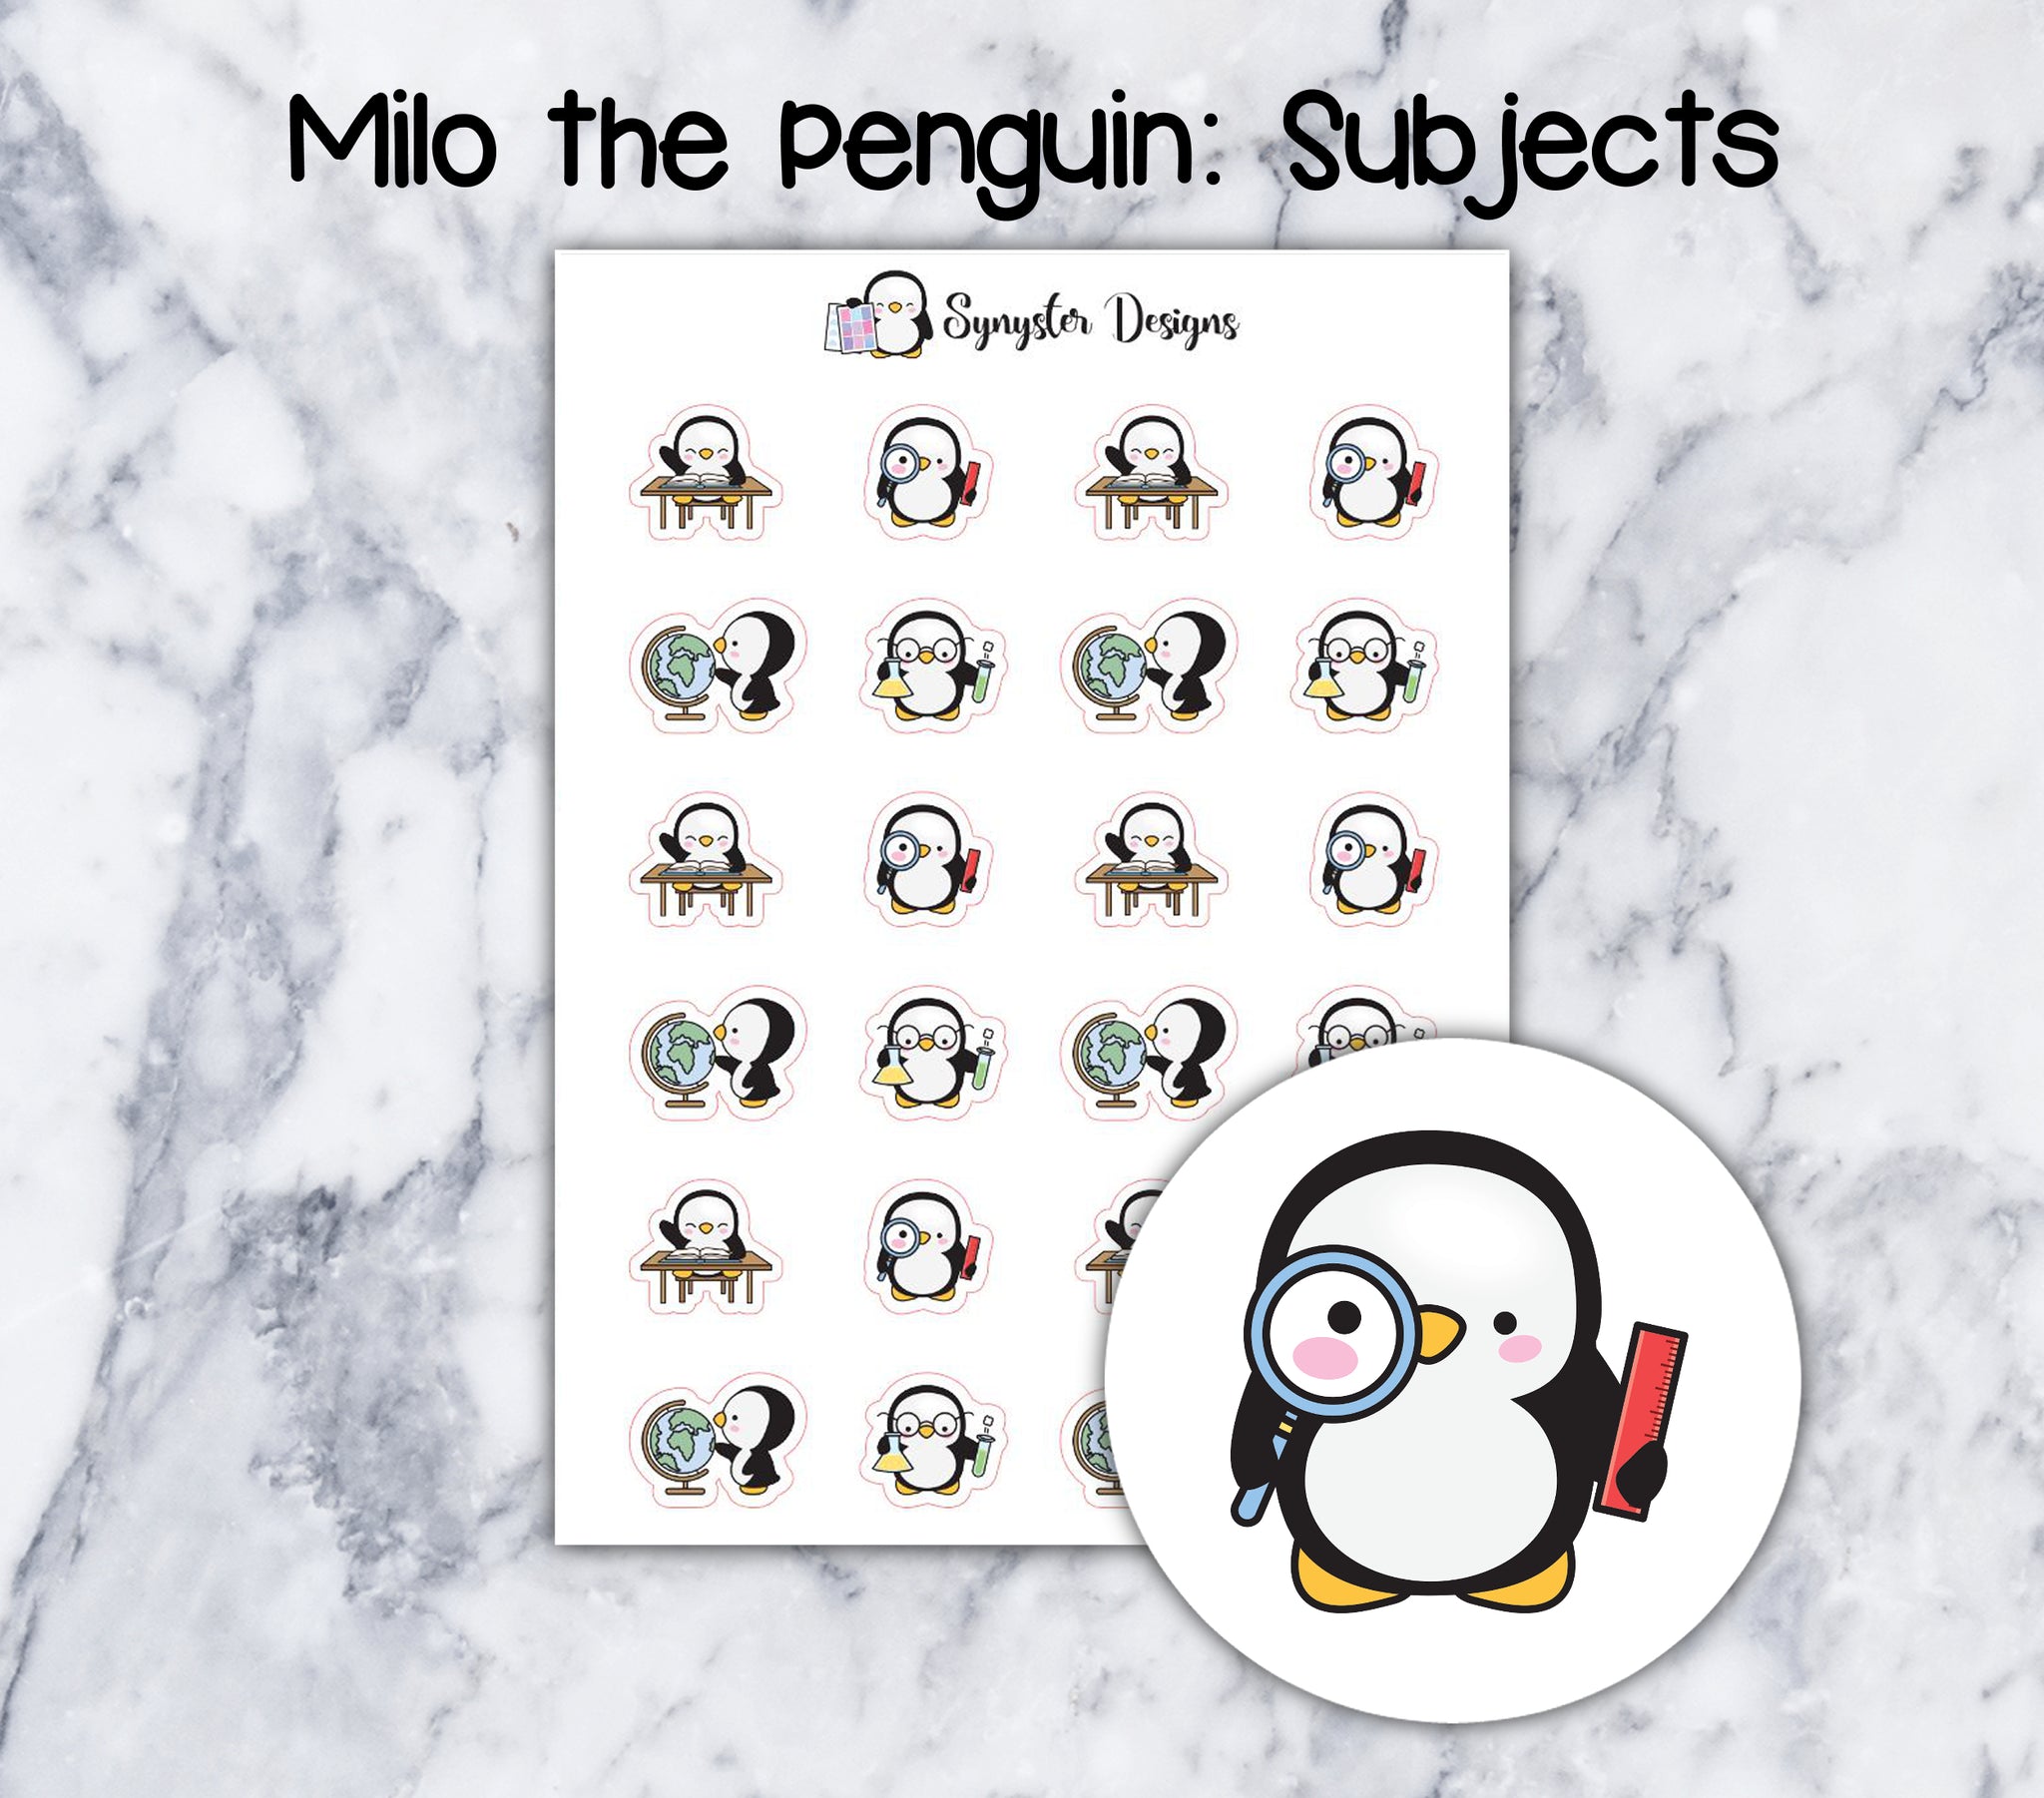 Subjects Milo the Penguin